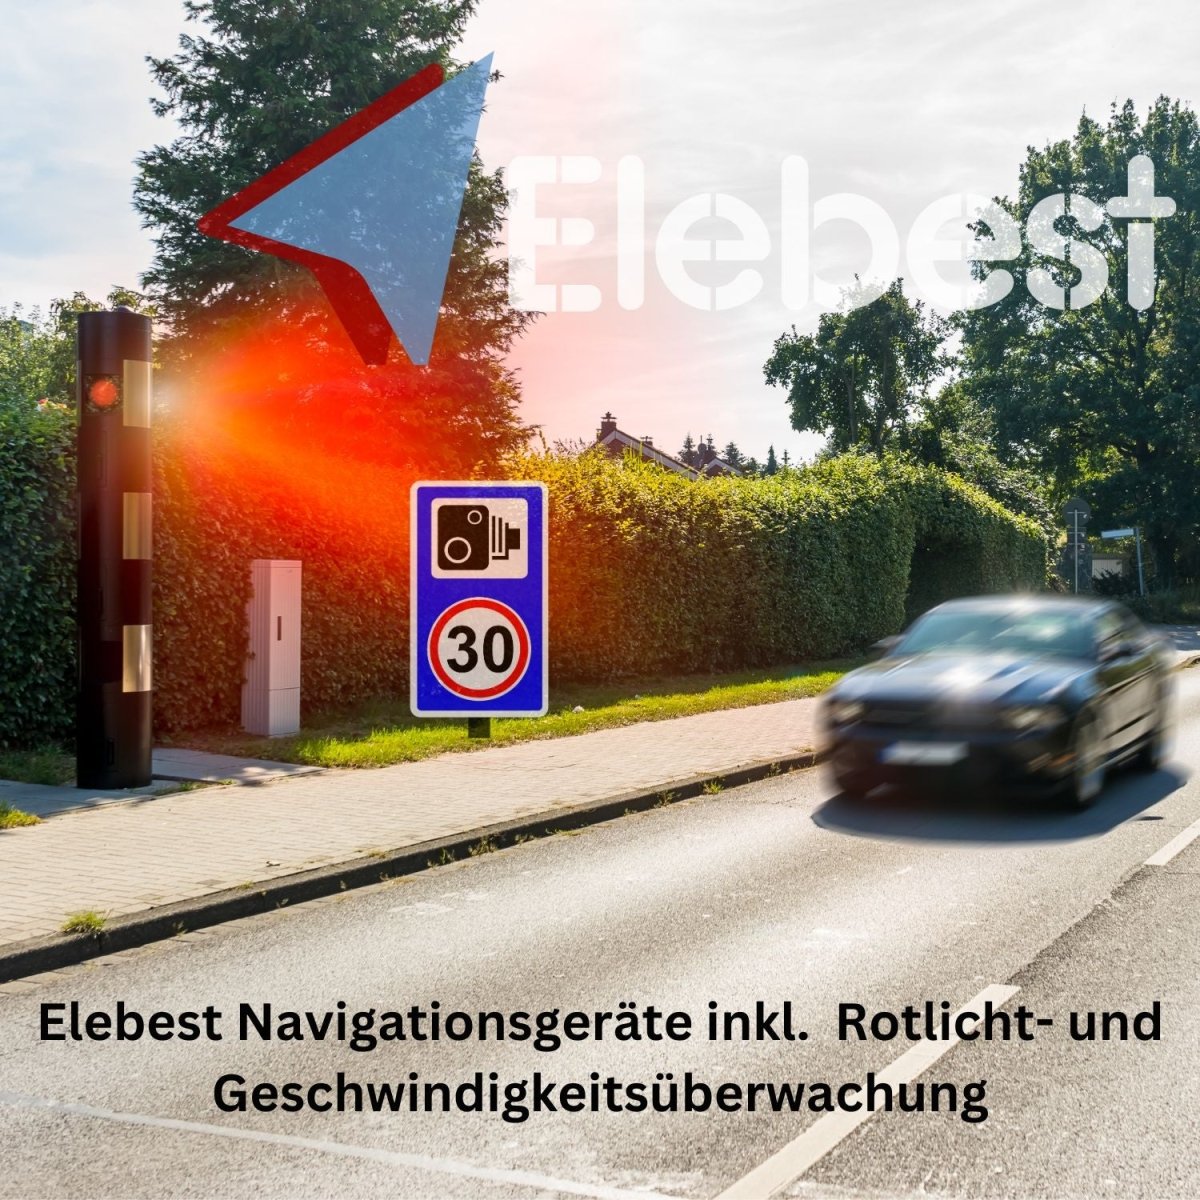 Das Elebest City 70KA Navi - Ihr ultimatives Fahrzeugnavigationssystem mit kabelloser RückfahrkameraFunk Rückfahrkamerakabellose rückfahrkameraRückfahrkamera